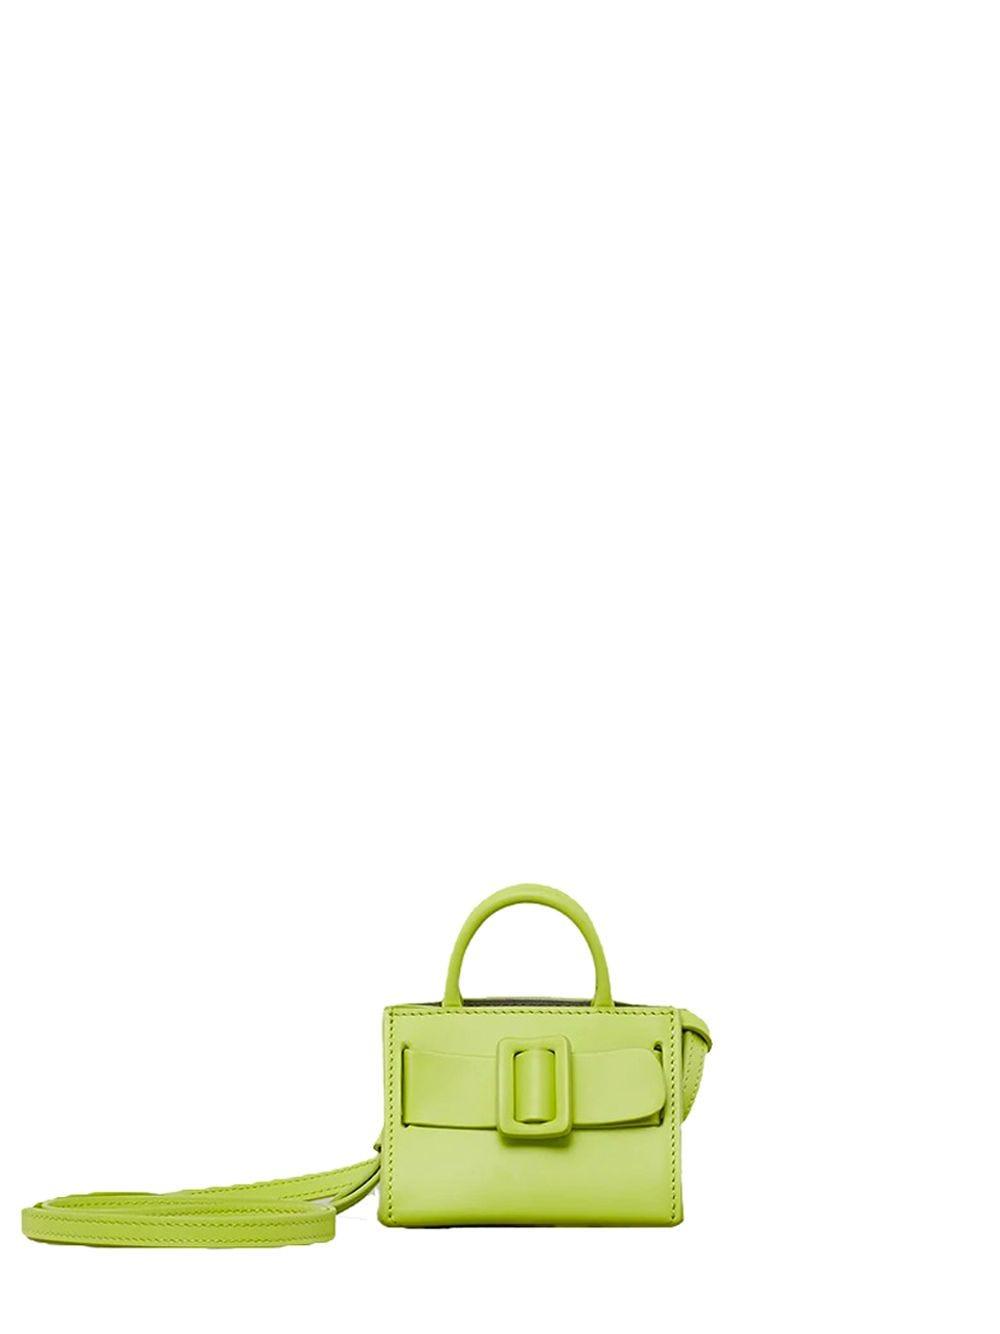 Boyy Lime Bobby Charm Mini Bag in Green | Lyst